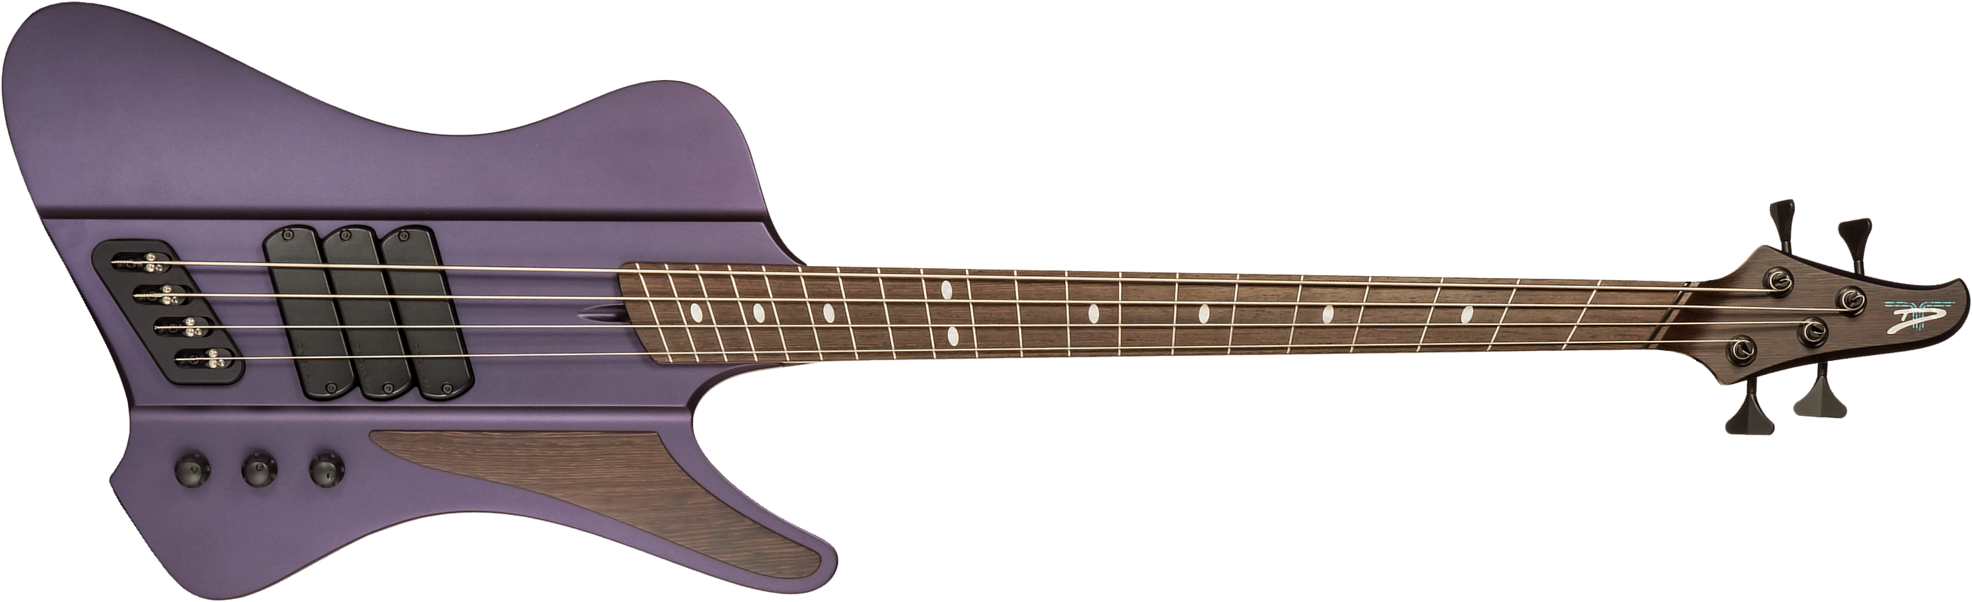 Dingwall Custom Shop D-roc 4c 3-pickups Wen #6982 - Purple To Faded Black - Bajo eléctrico de cuerpo sólido - Main picture